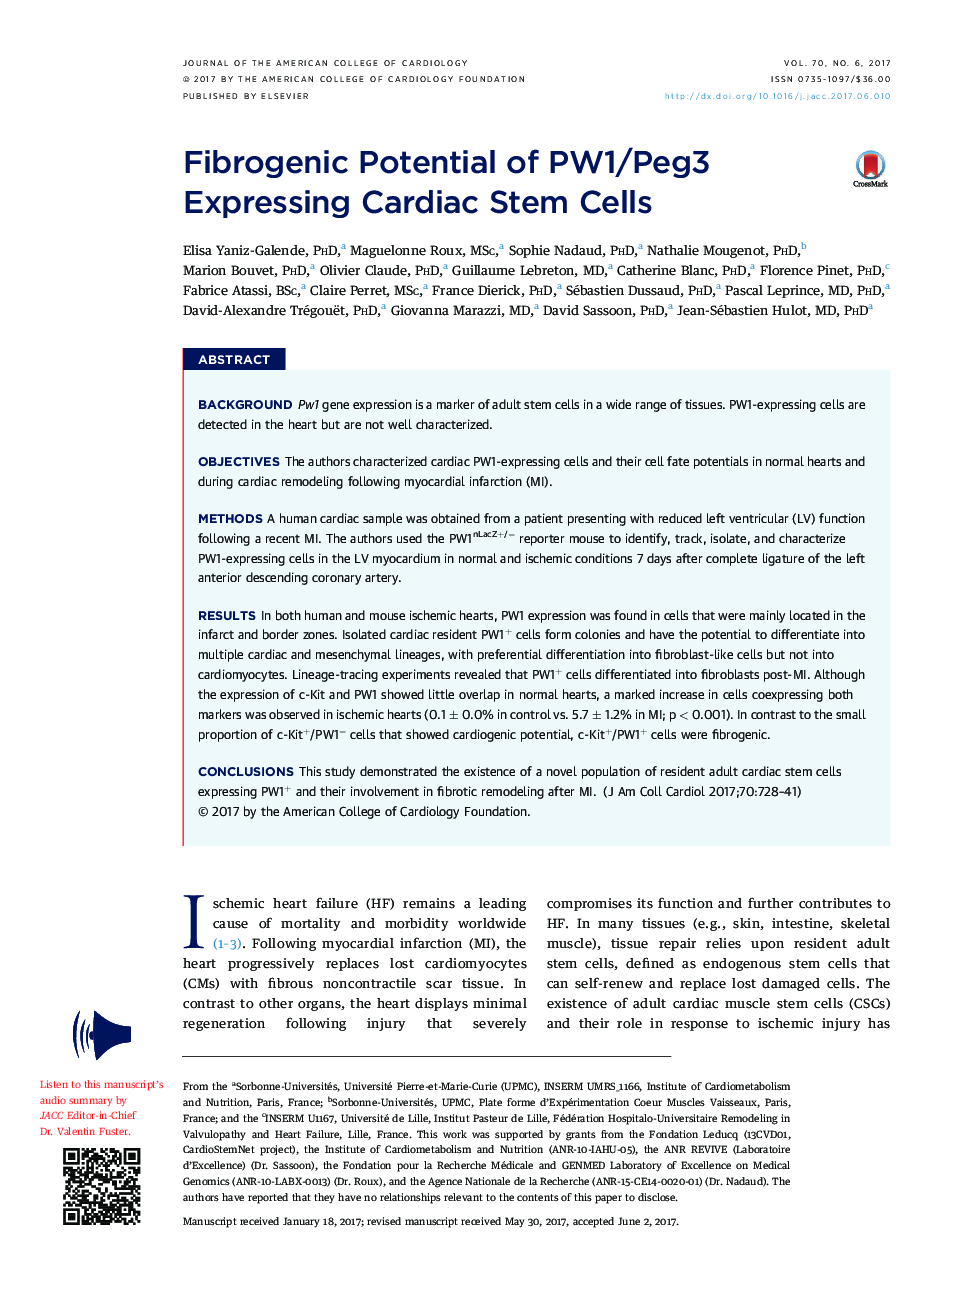 Fibrogenic Potential of PW1/Peg3 Expressing Cardiac Stem Cells